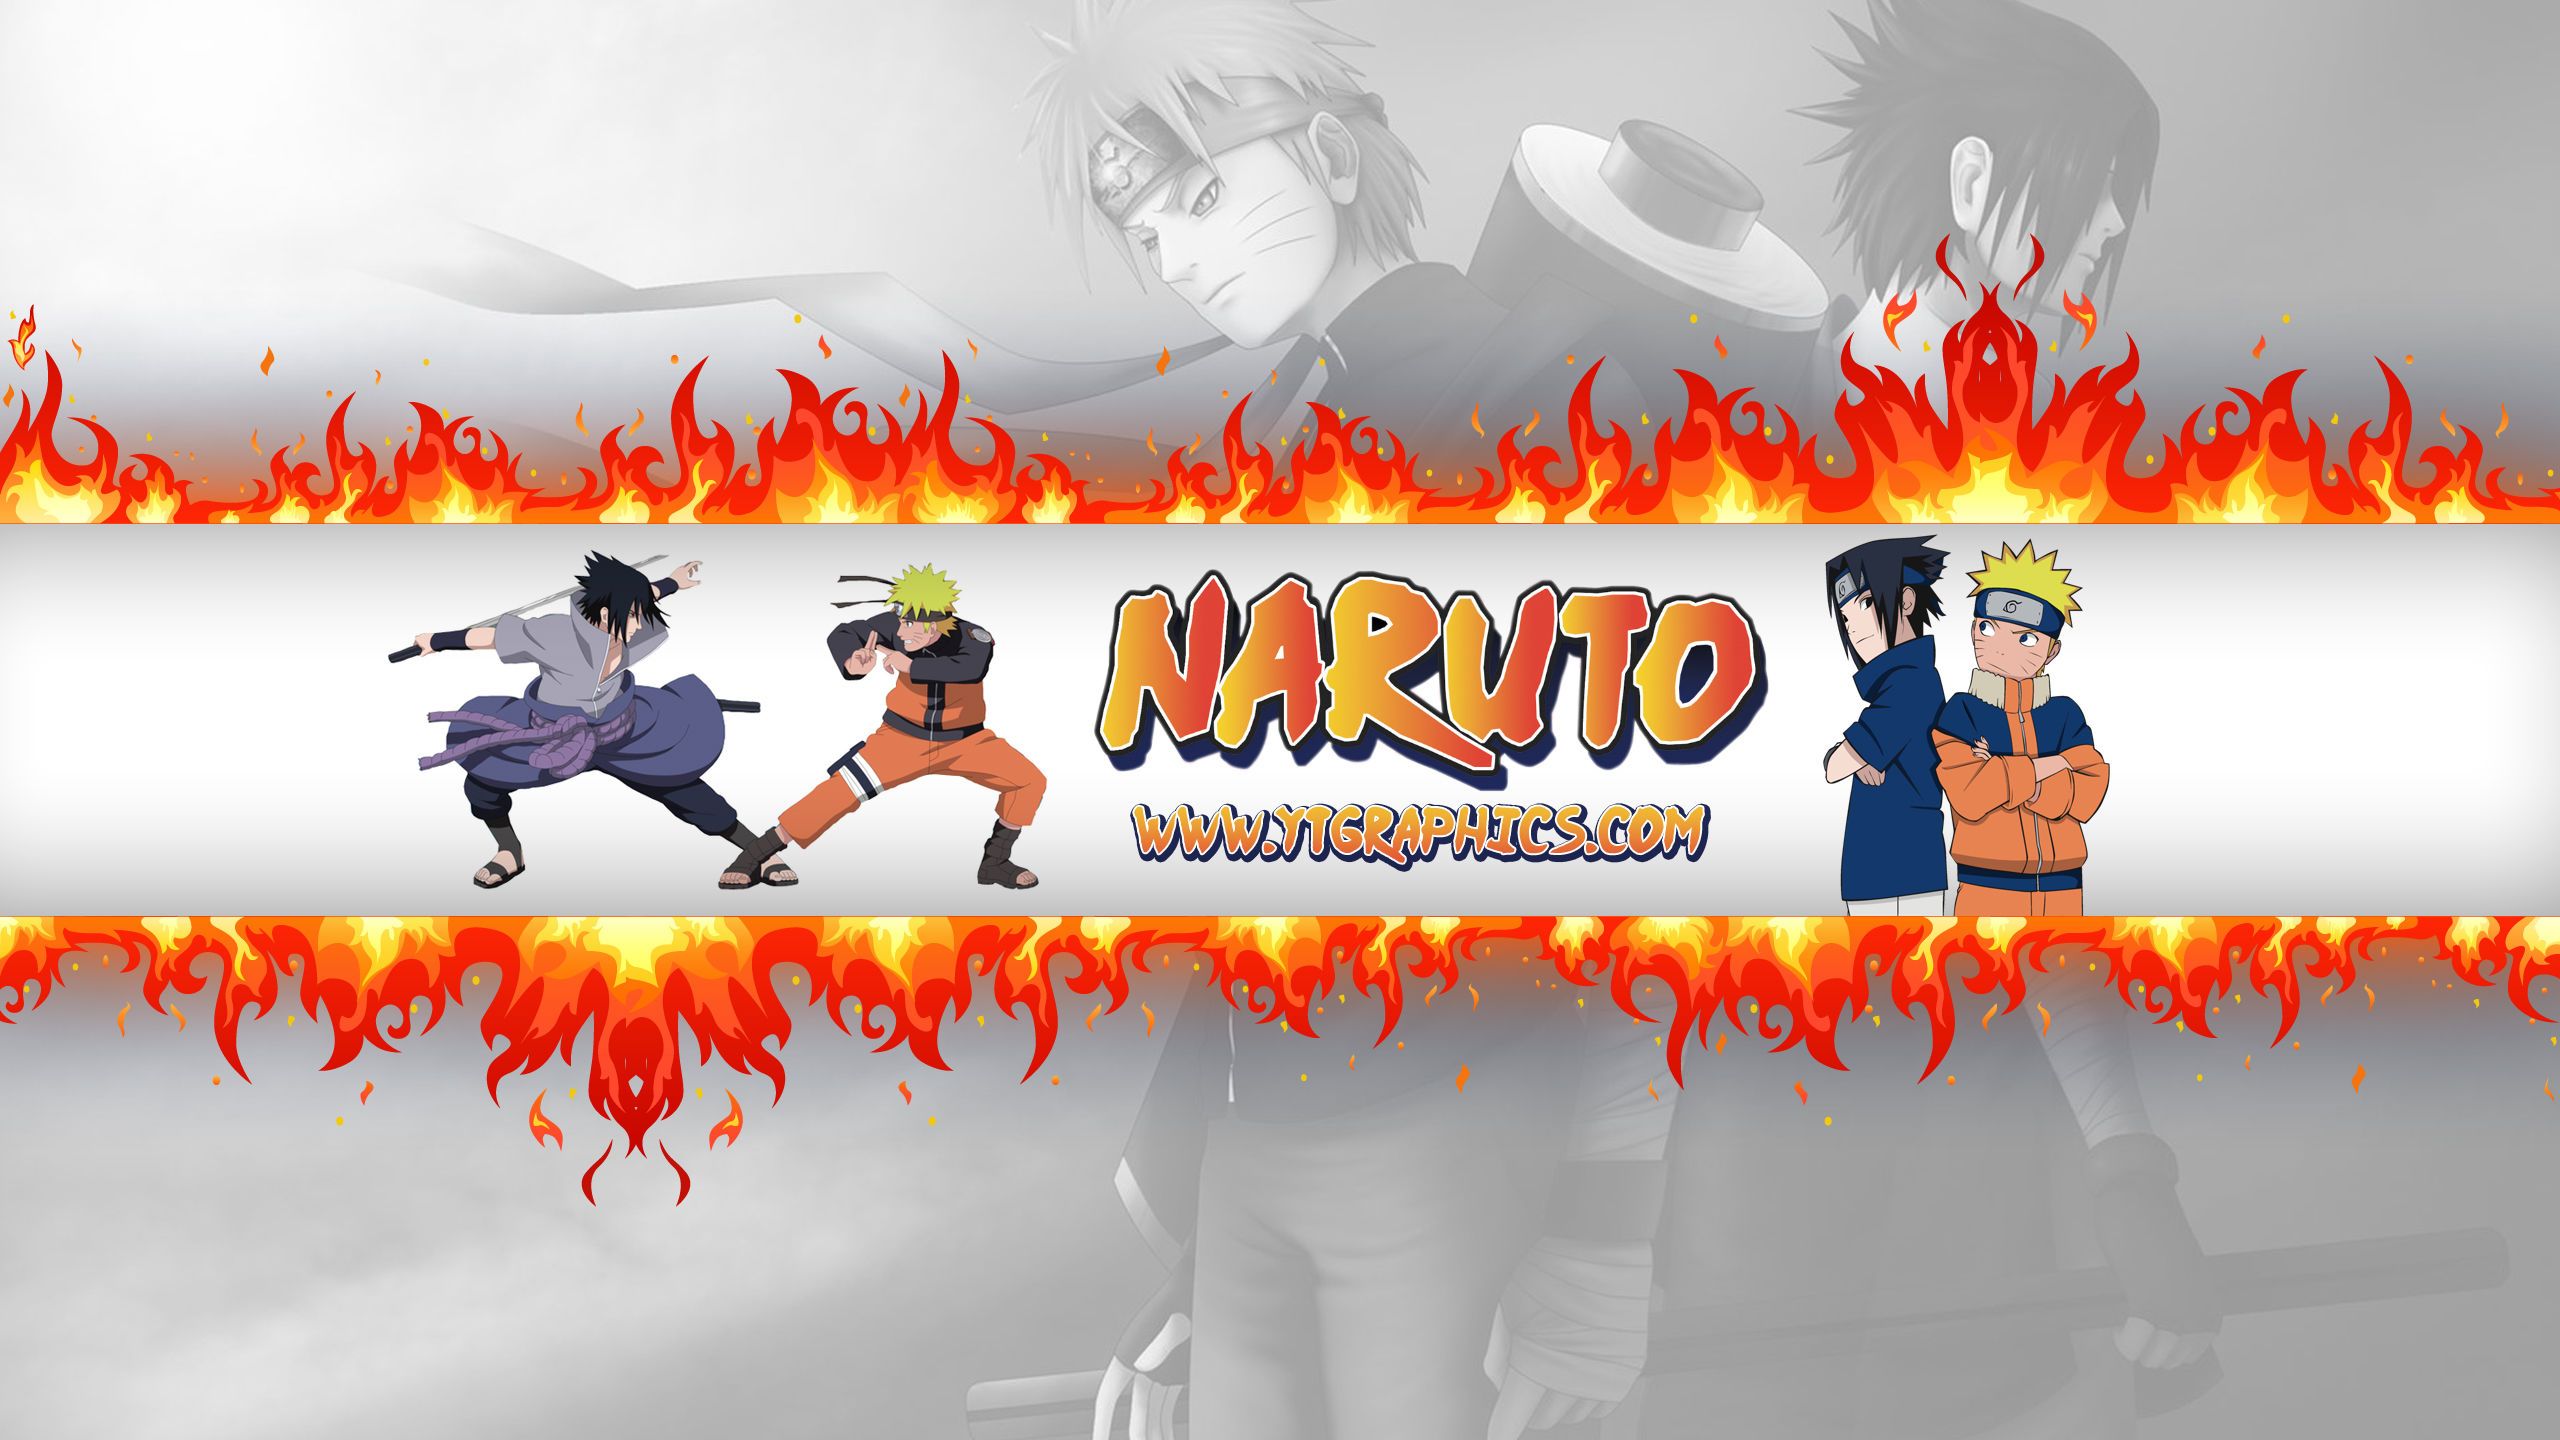 Naruto Wallpaper Youtube gambar ke 5